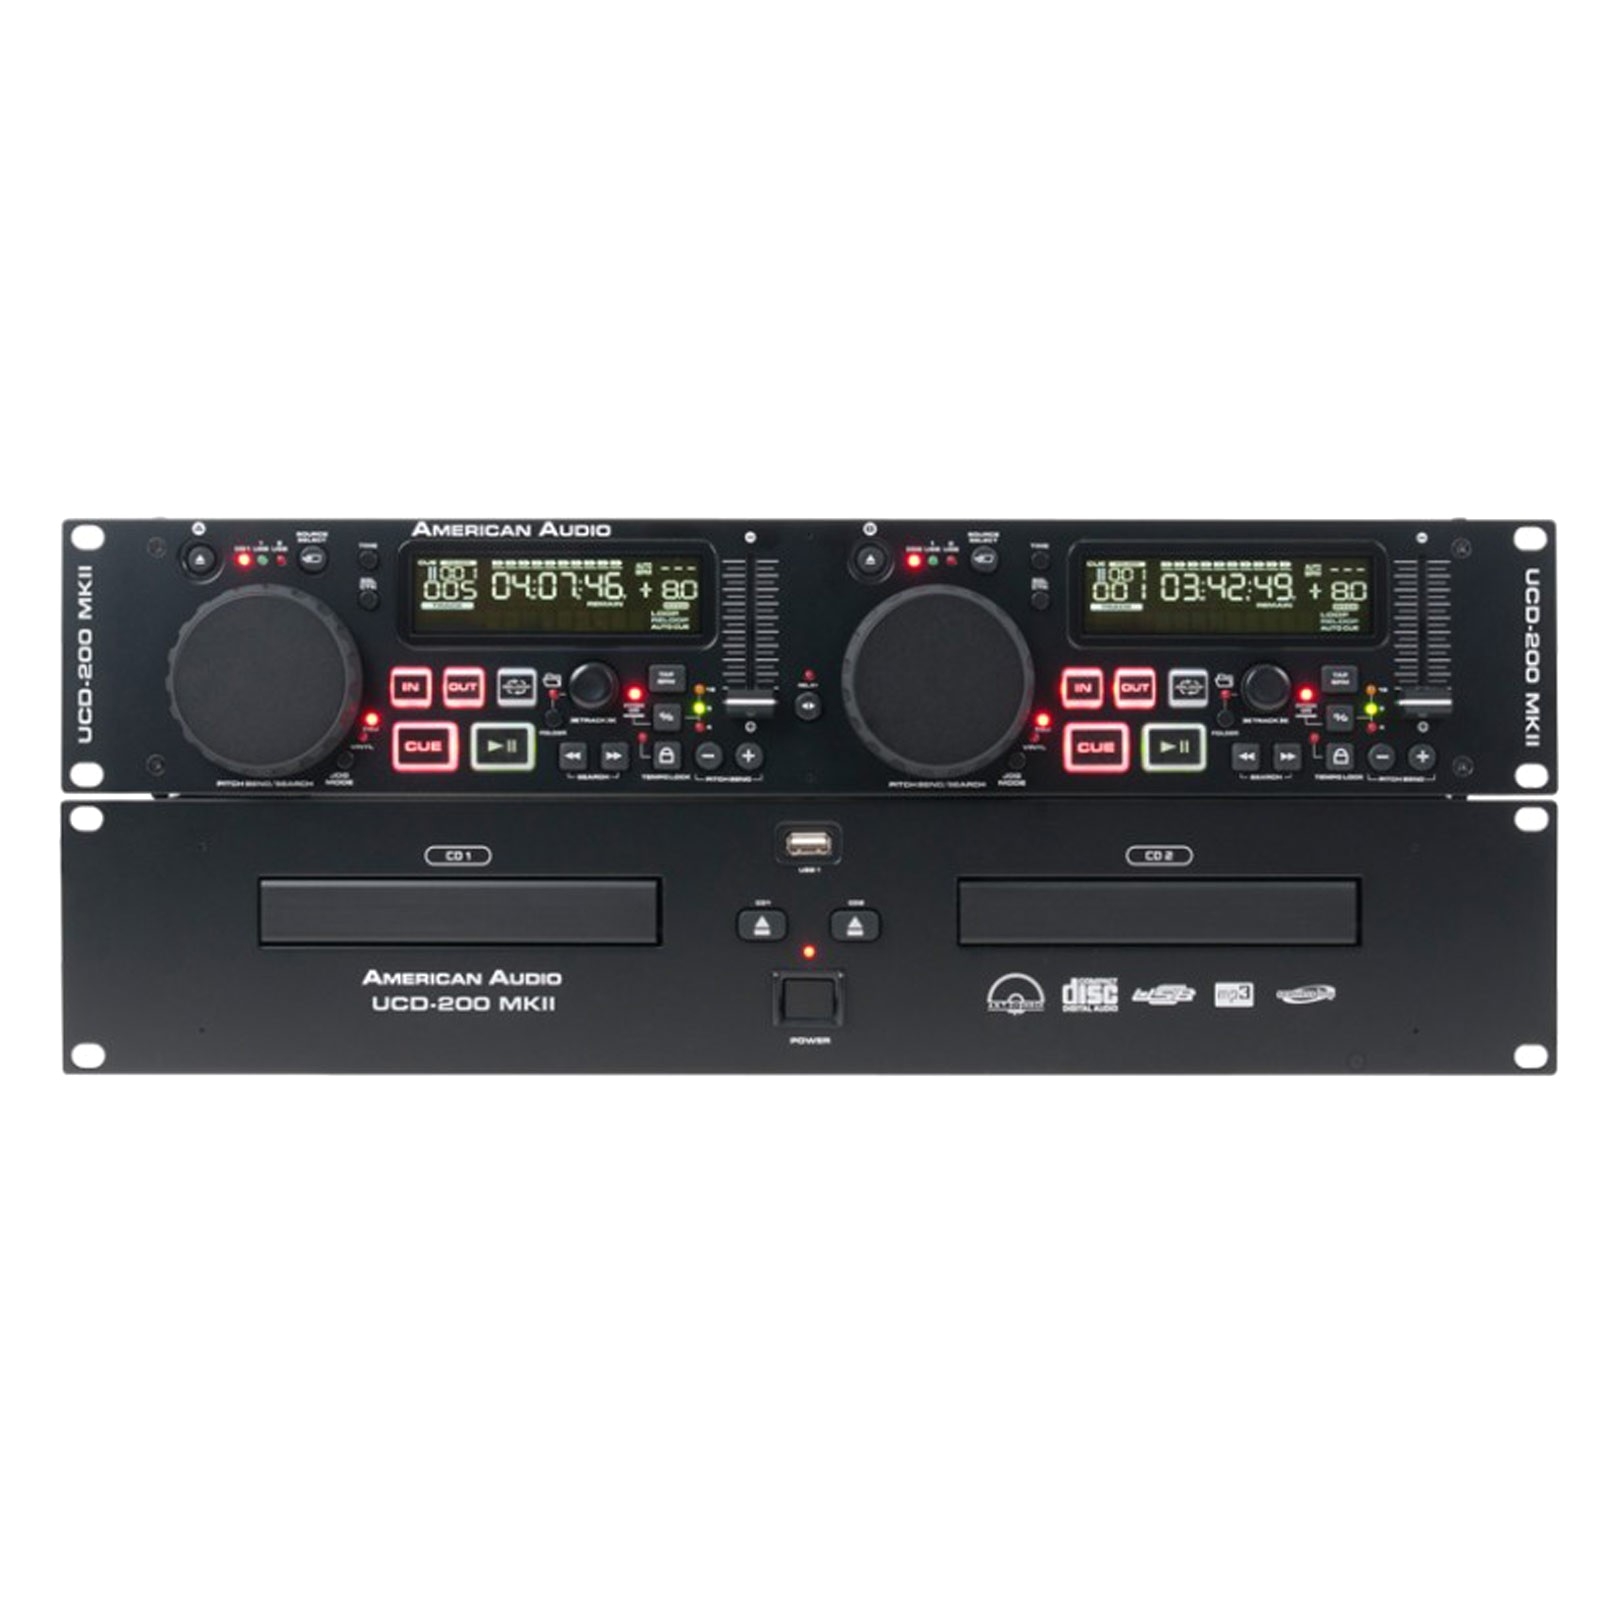 Marantz Rack Mount Digital Audio Recorder American Audio Ucd 200 Mkii 19 Rack Mount Dual Cd Mp3 Player with